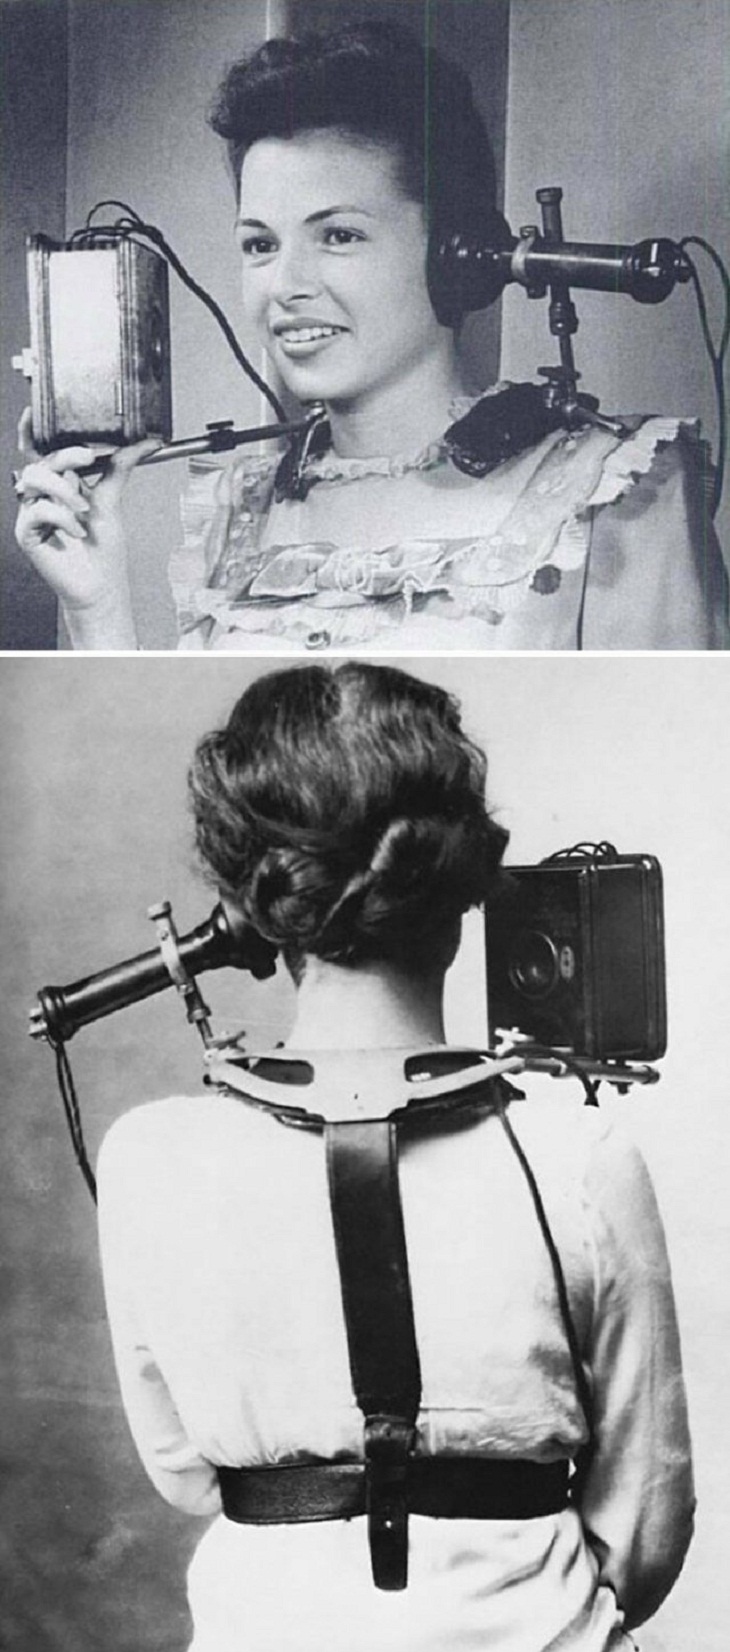 Vintage Versions of Modern Technology, headphones